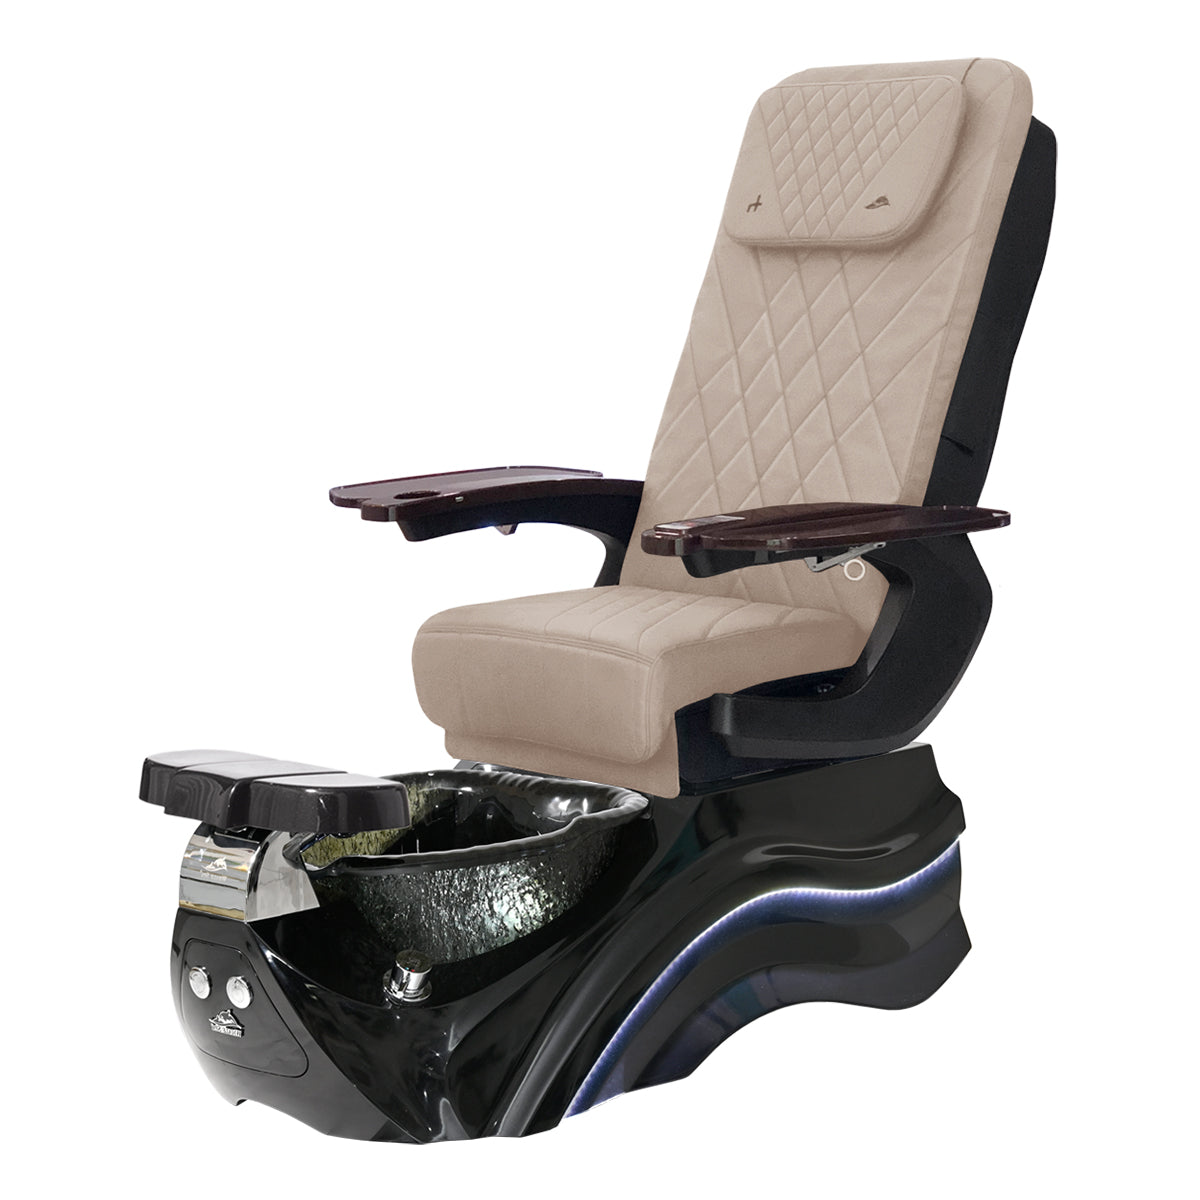 Taurus Pedicure Chair Package Deal